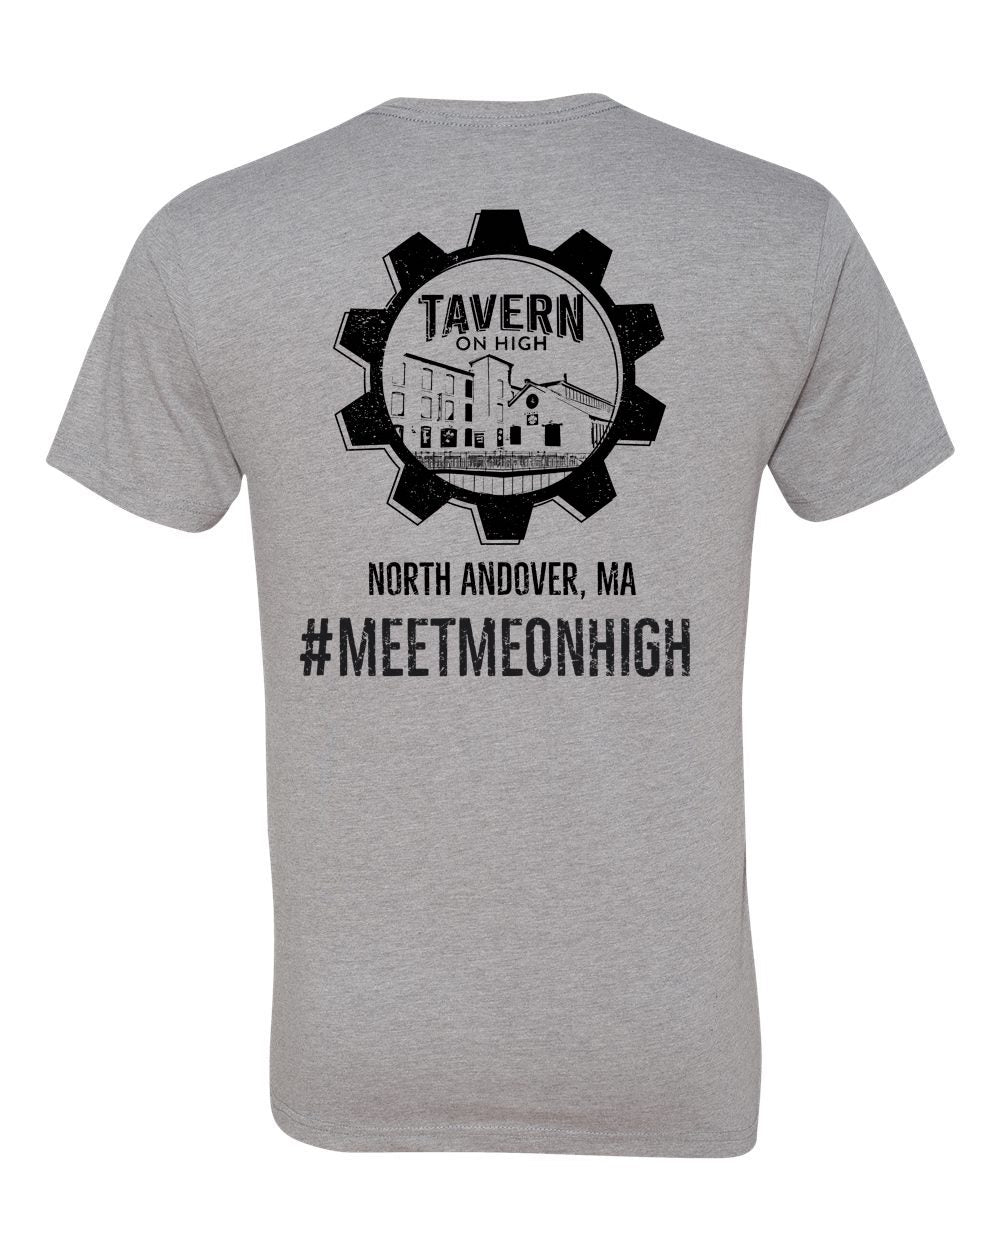 Tavern on High West Mill Unisex V-Neck T-Shirt